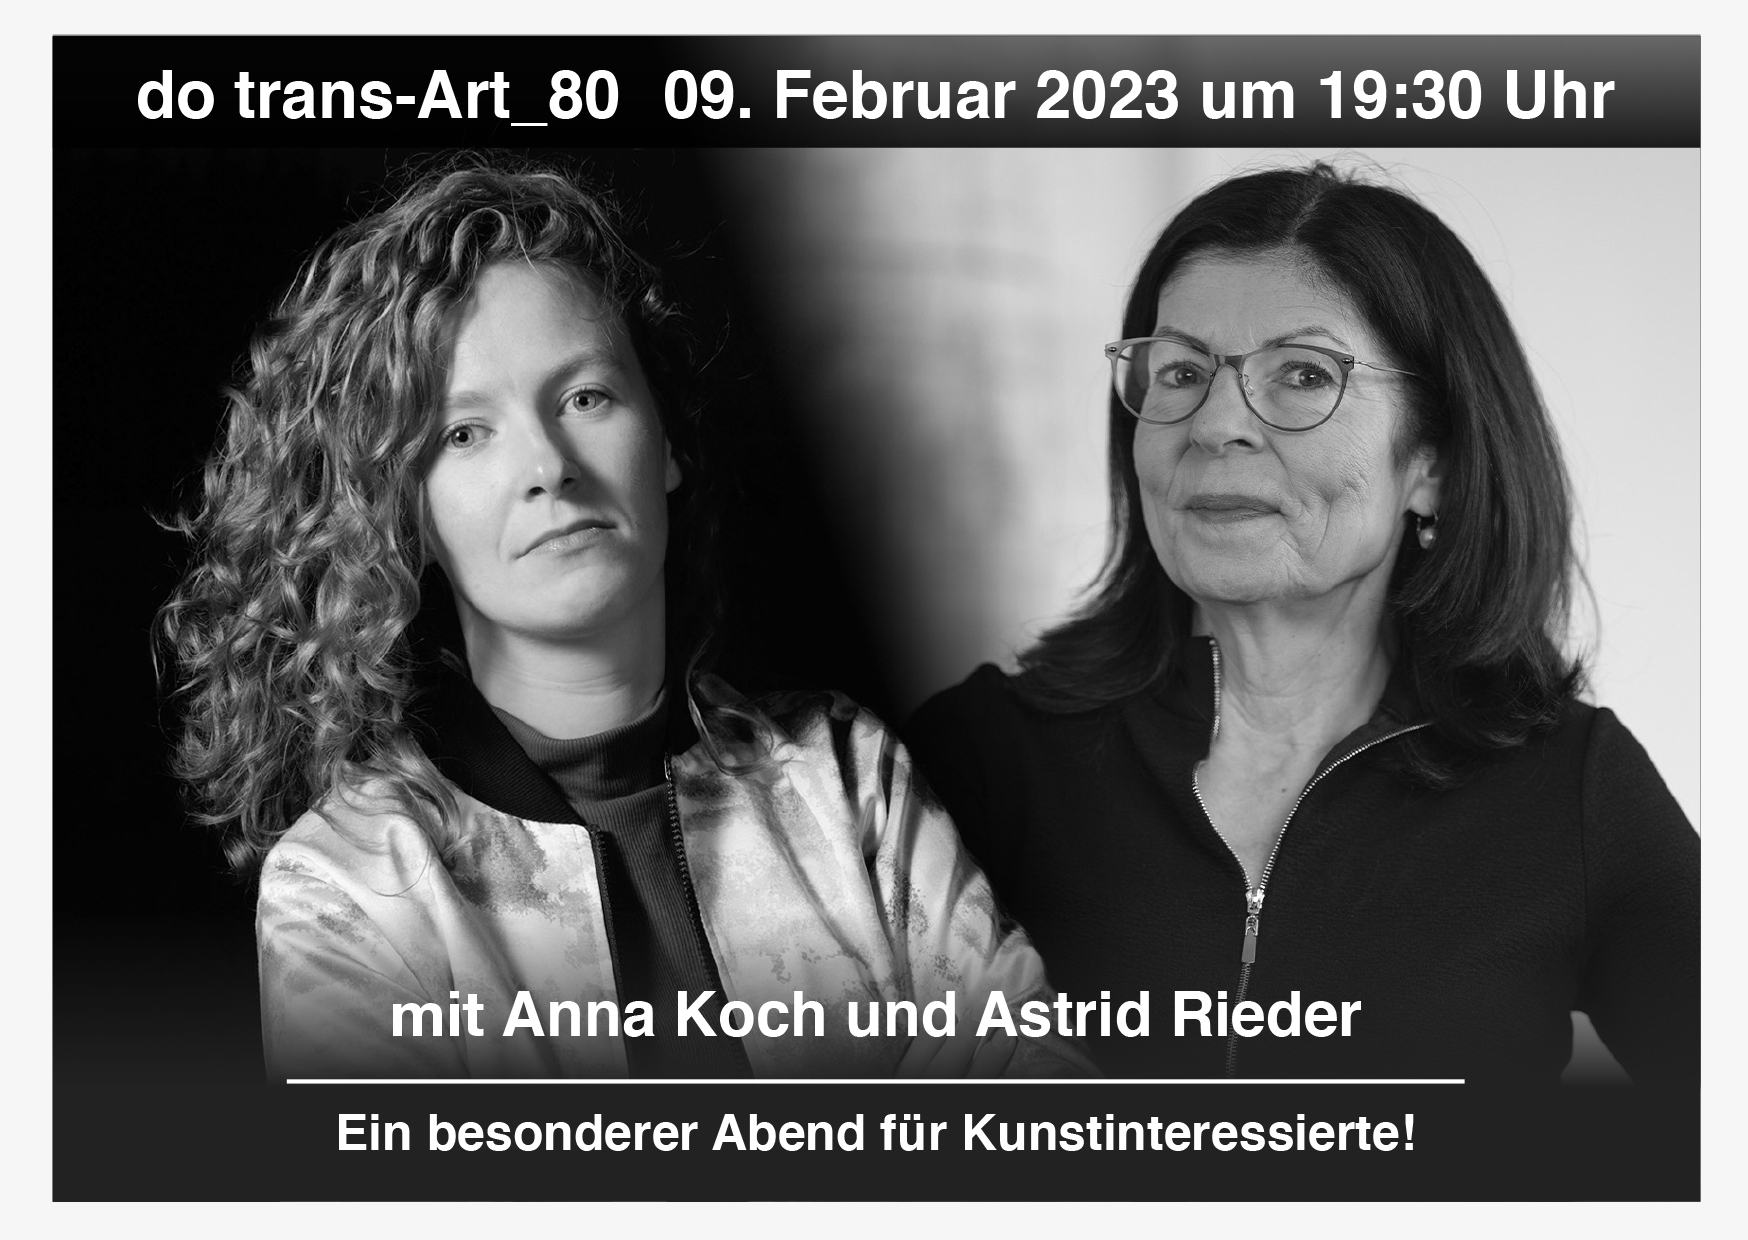 do trans-Art_80 wit Anna Koch and Astrid Rieder at Bundesstraße 37, 5071 Wals